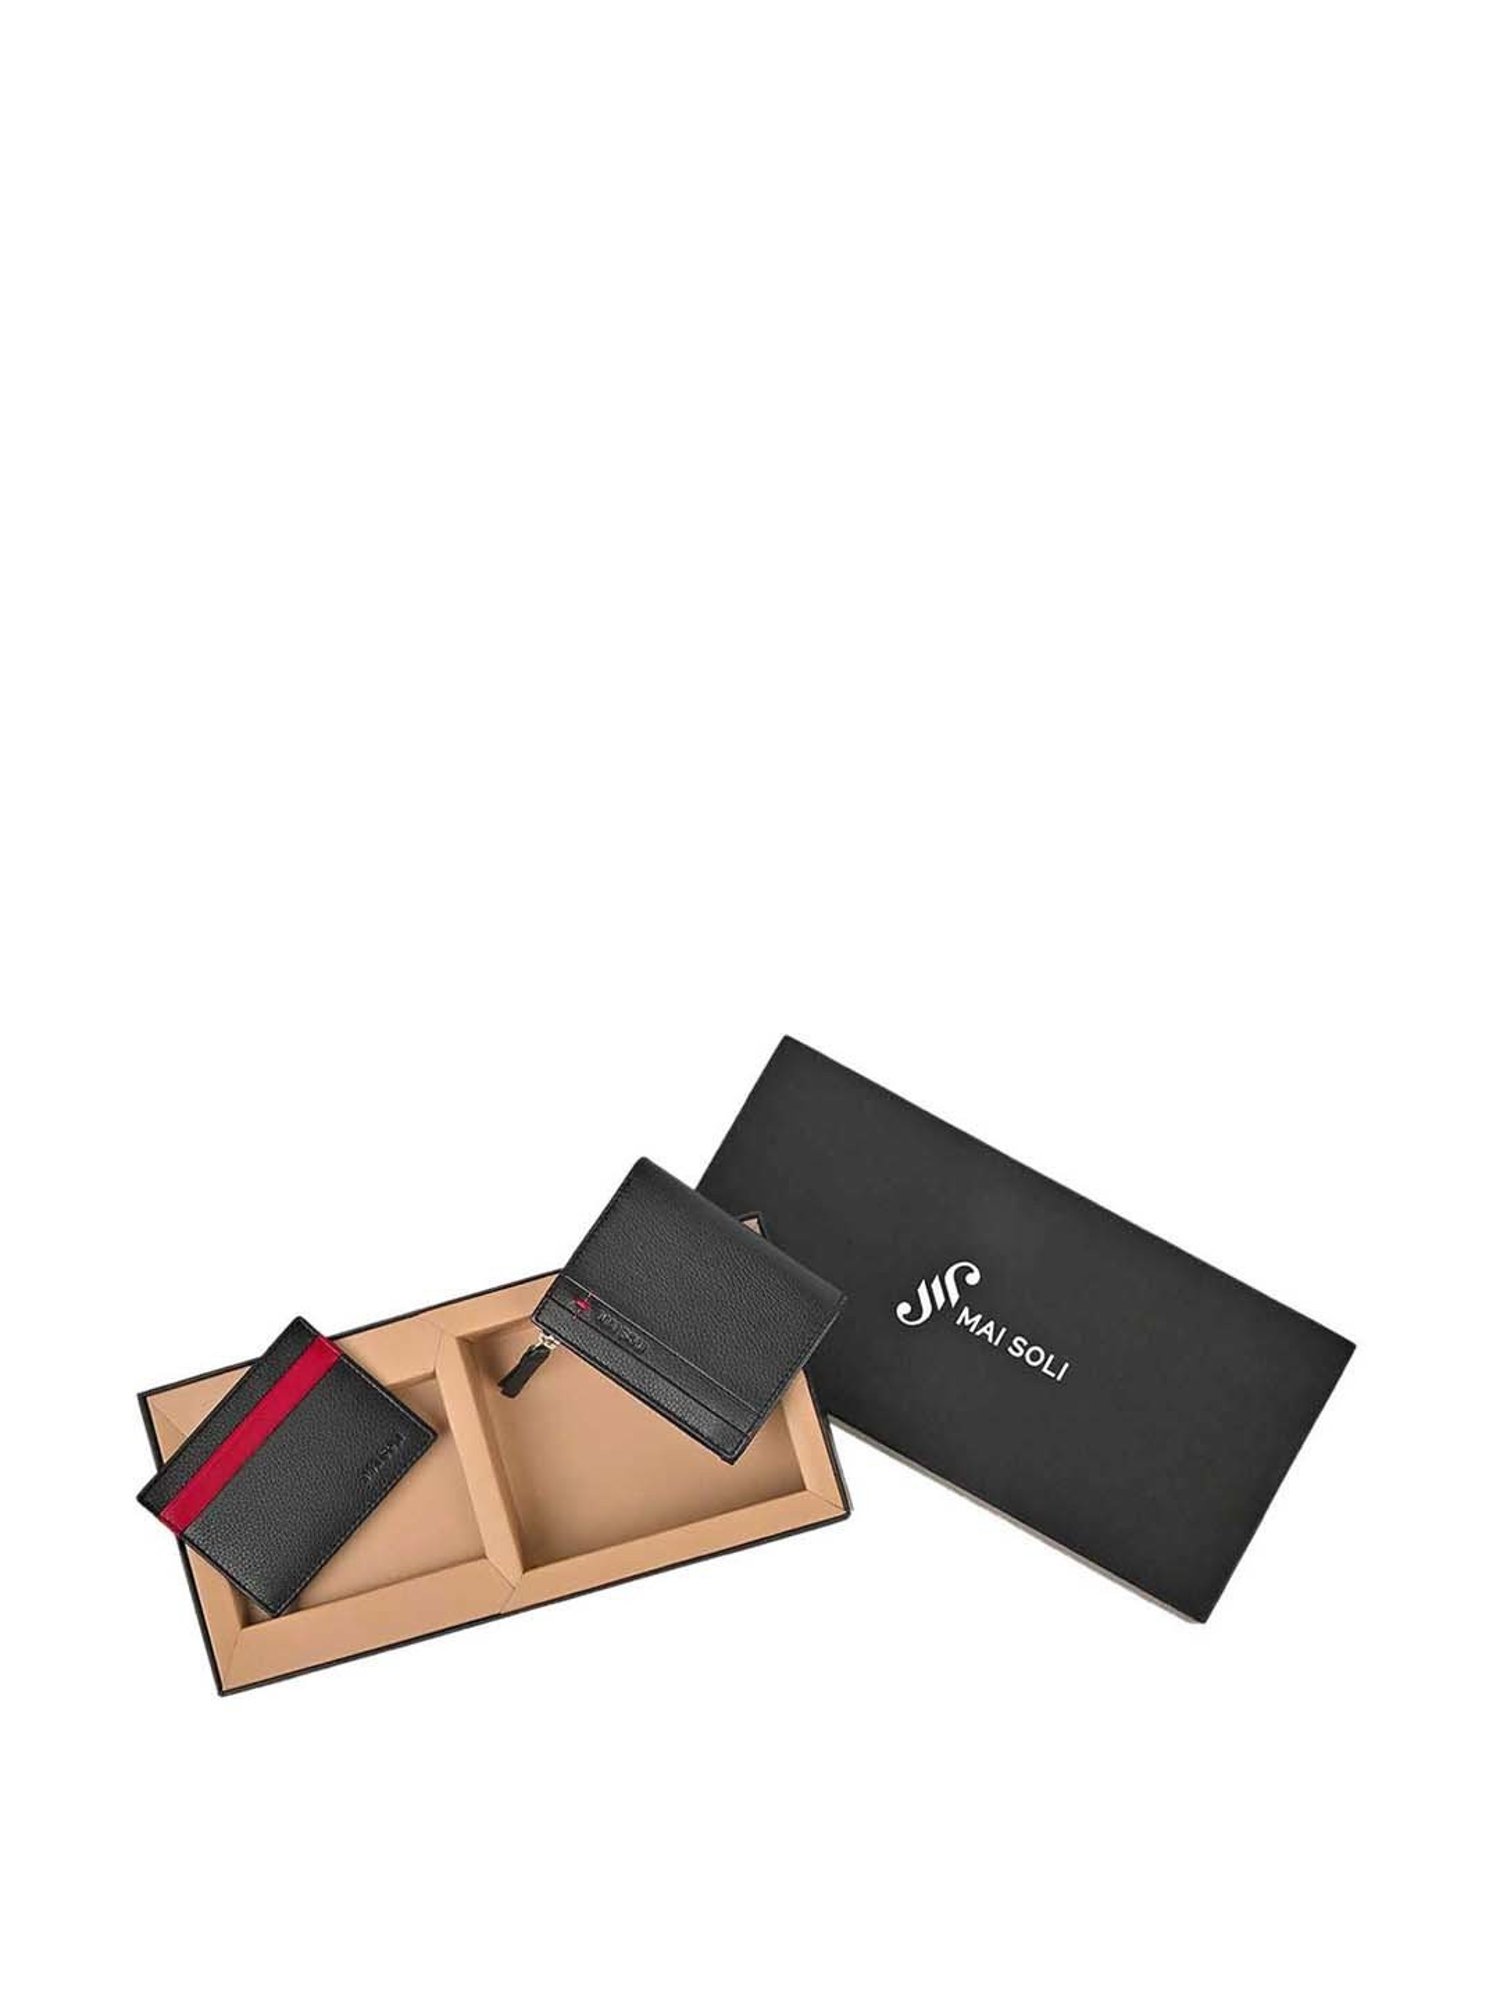 Neo Zip Wallet + Card Holder Gift Set - Black / Red – Mai Soli